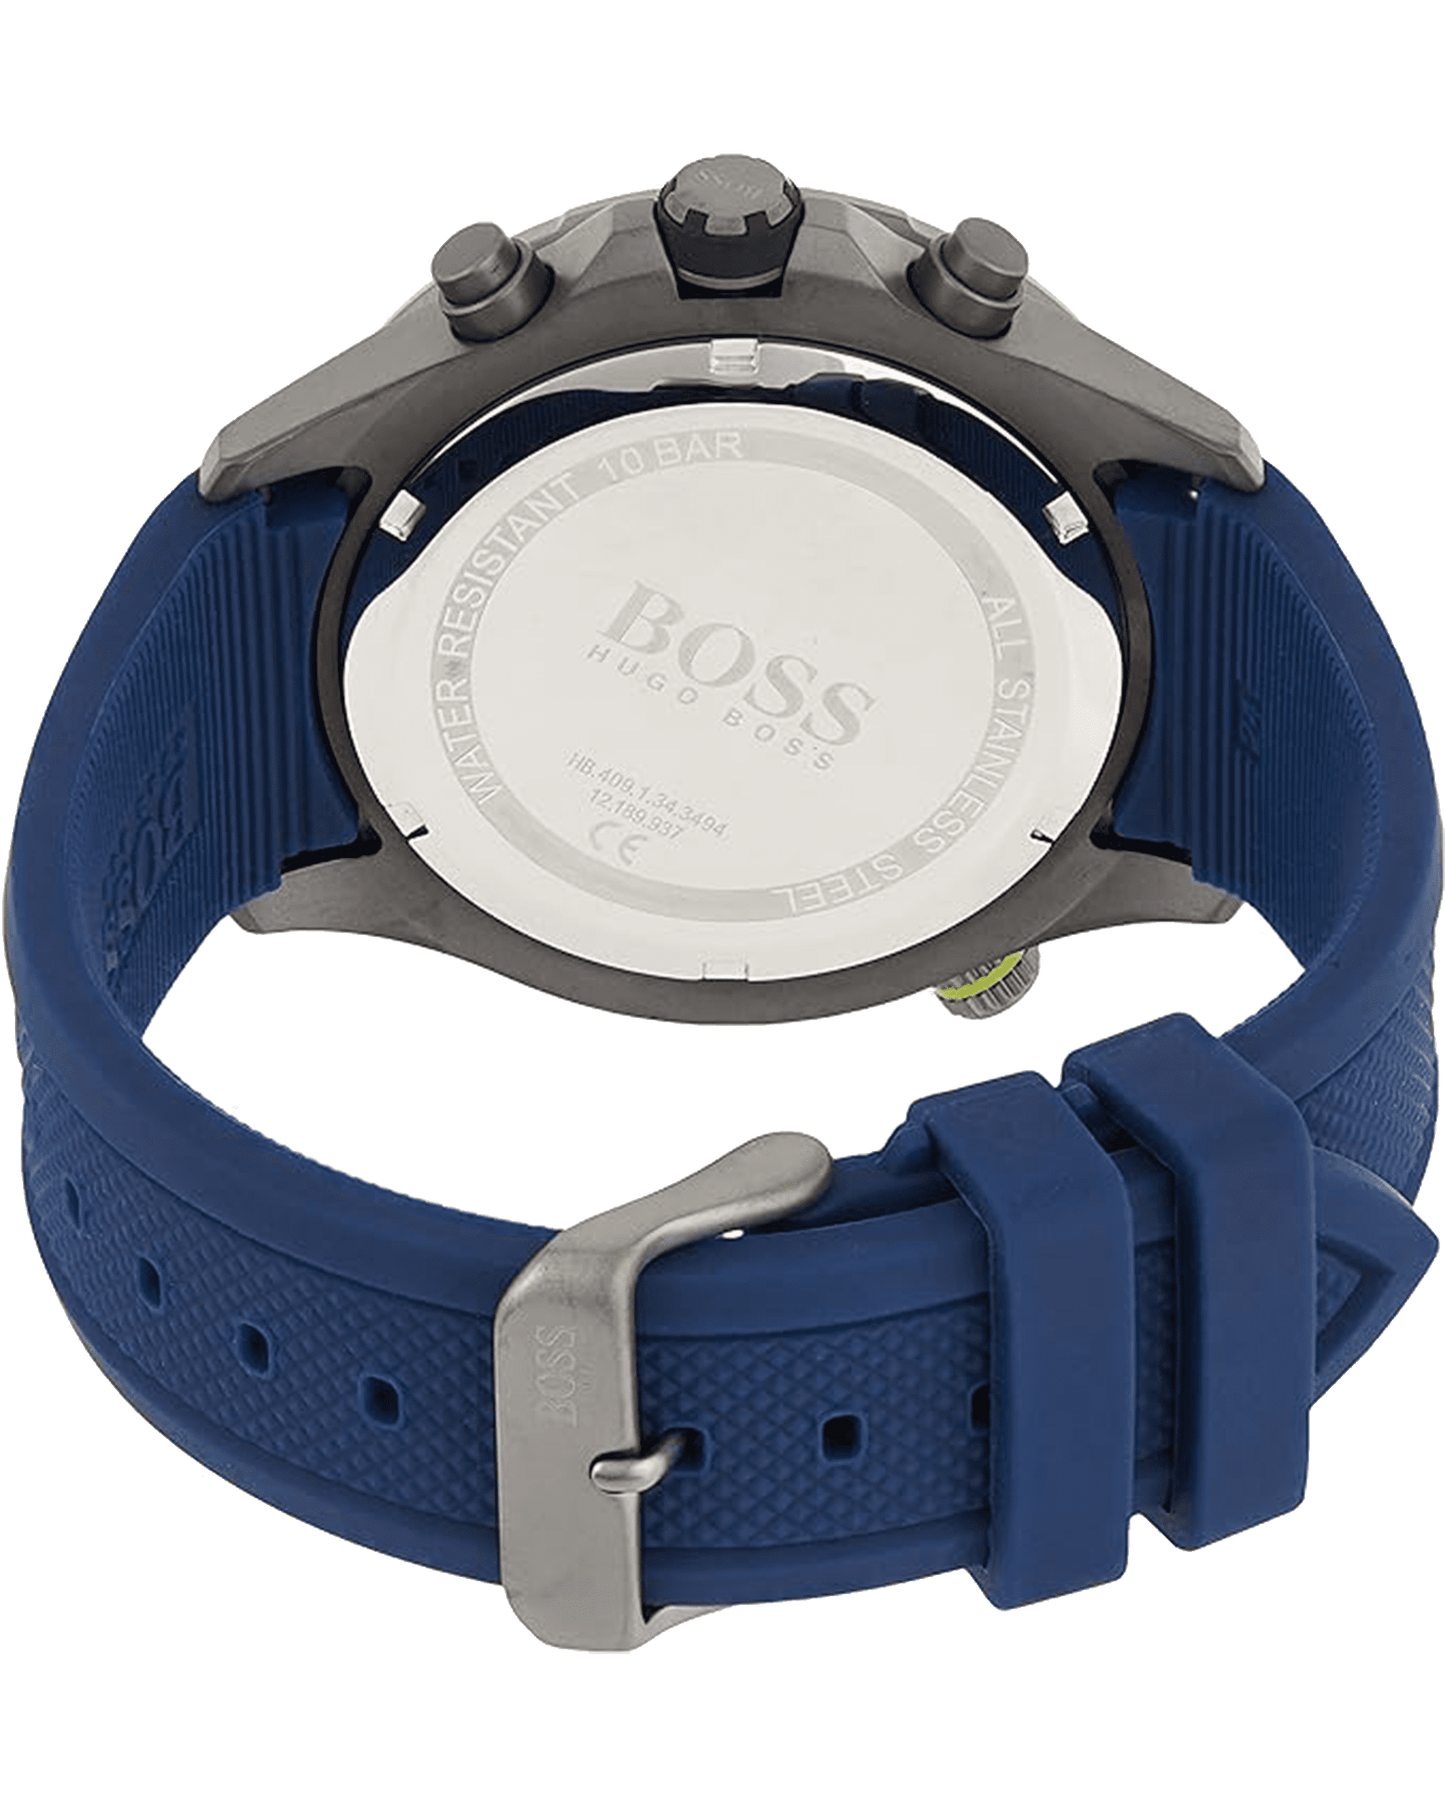 Hugo Boss: Sleek Design and Precision Craftsmanship